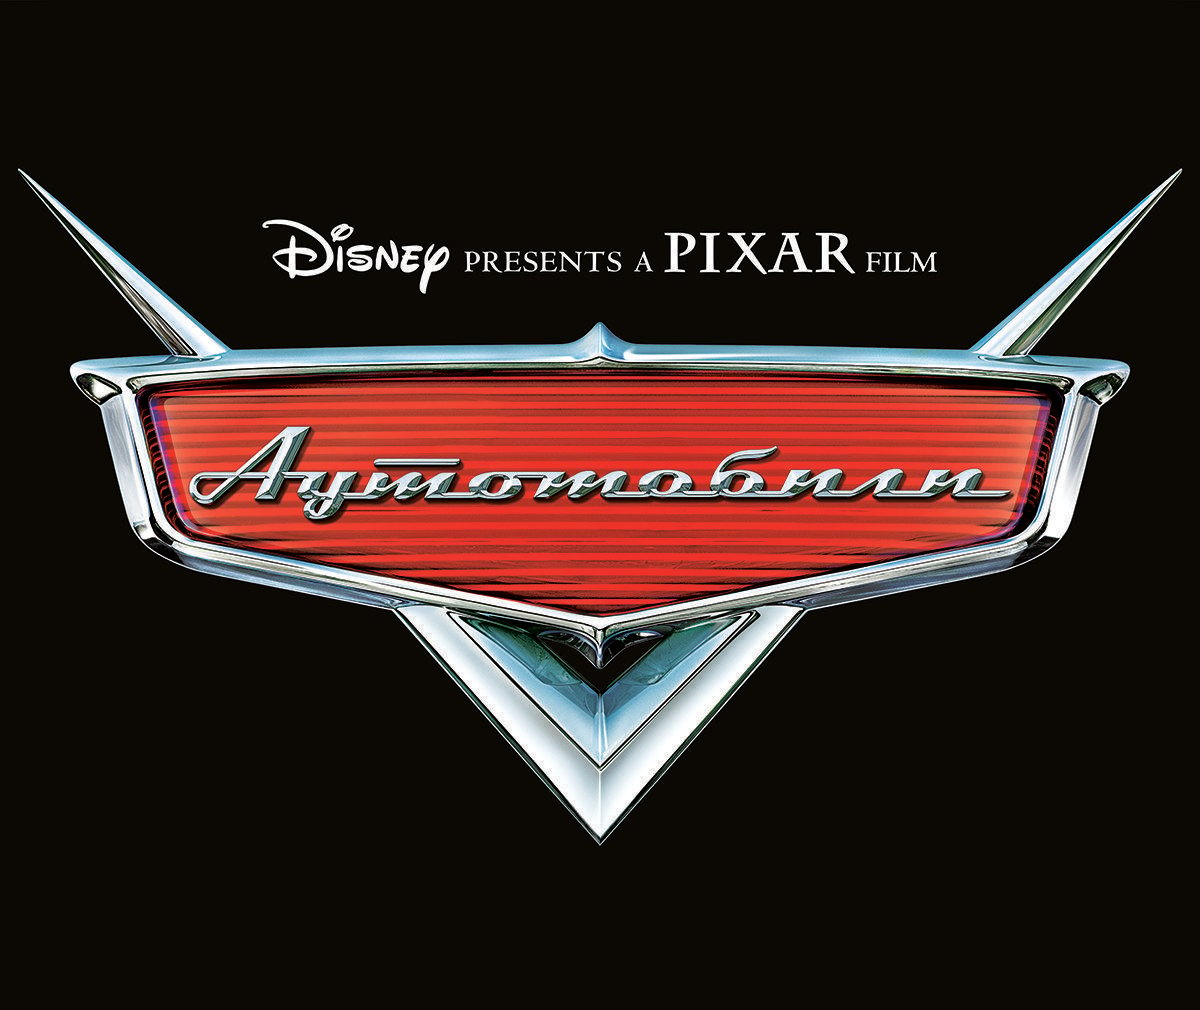 Disney Pixar Logo - times Disney Pixar localized logos of their movies